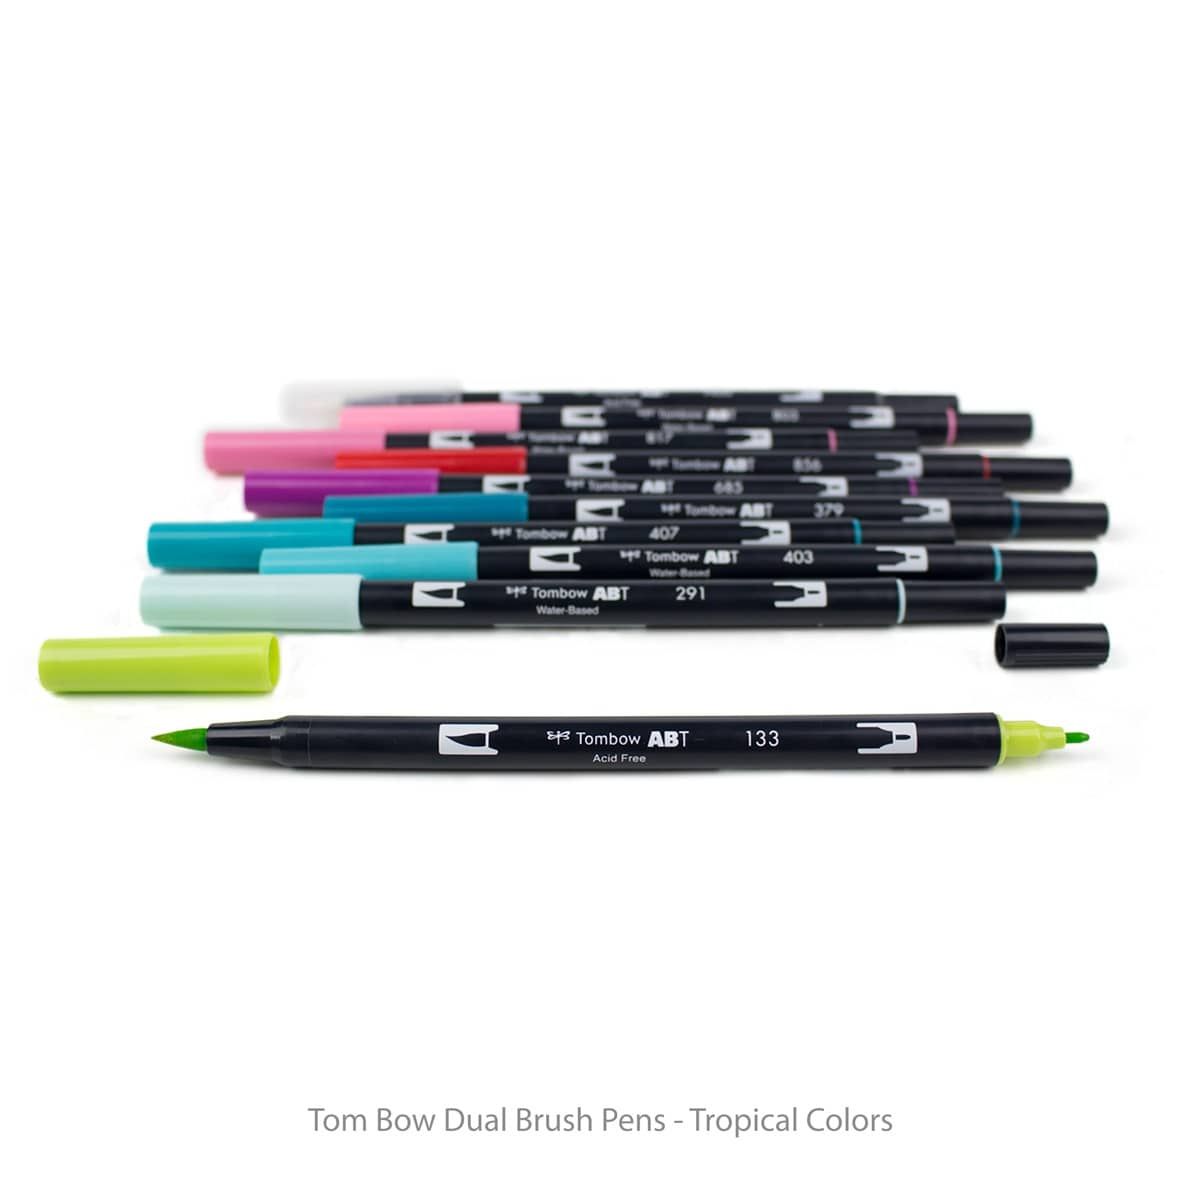 https://www.jerrysartarama.com/media/catalog/product/cache/ecb49a32eeb5603594b082bd5fe65733/t/o/tombow-dual-brush-pen-set-tropical-colors-main.jpg